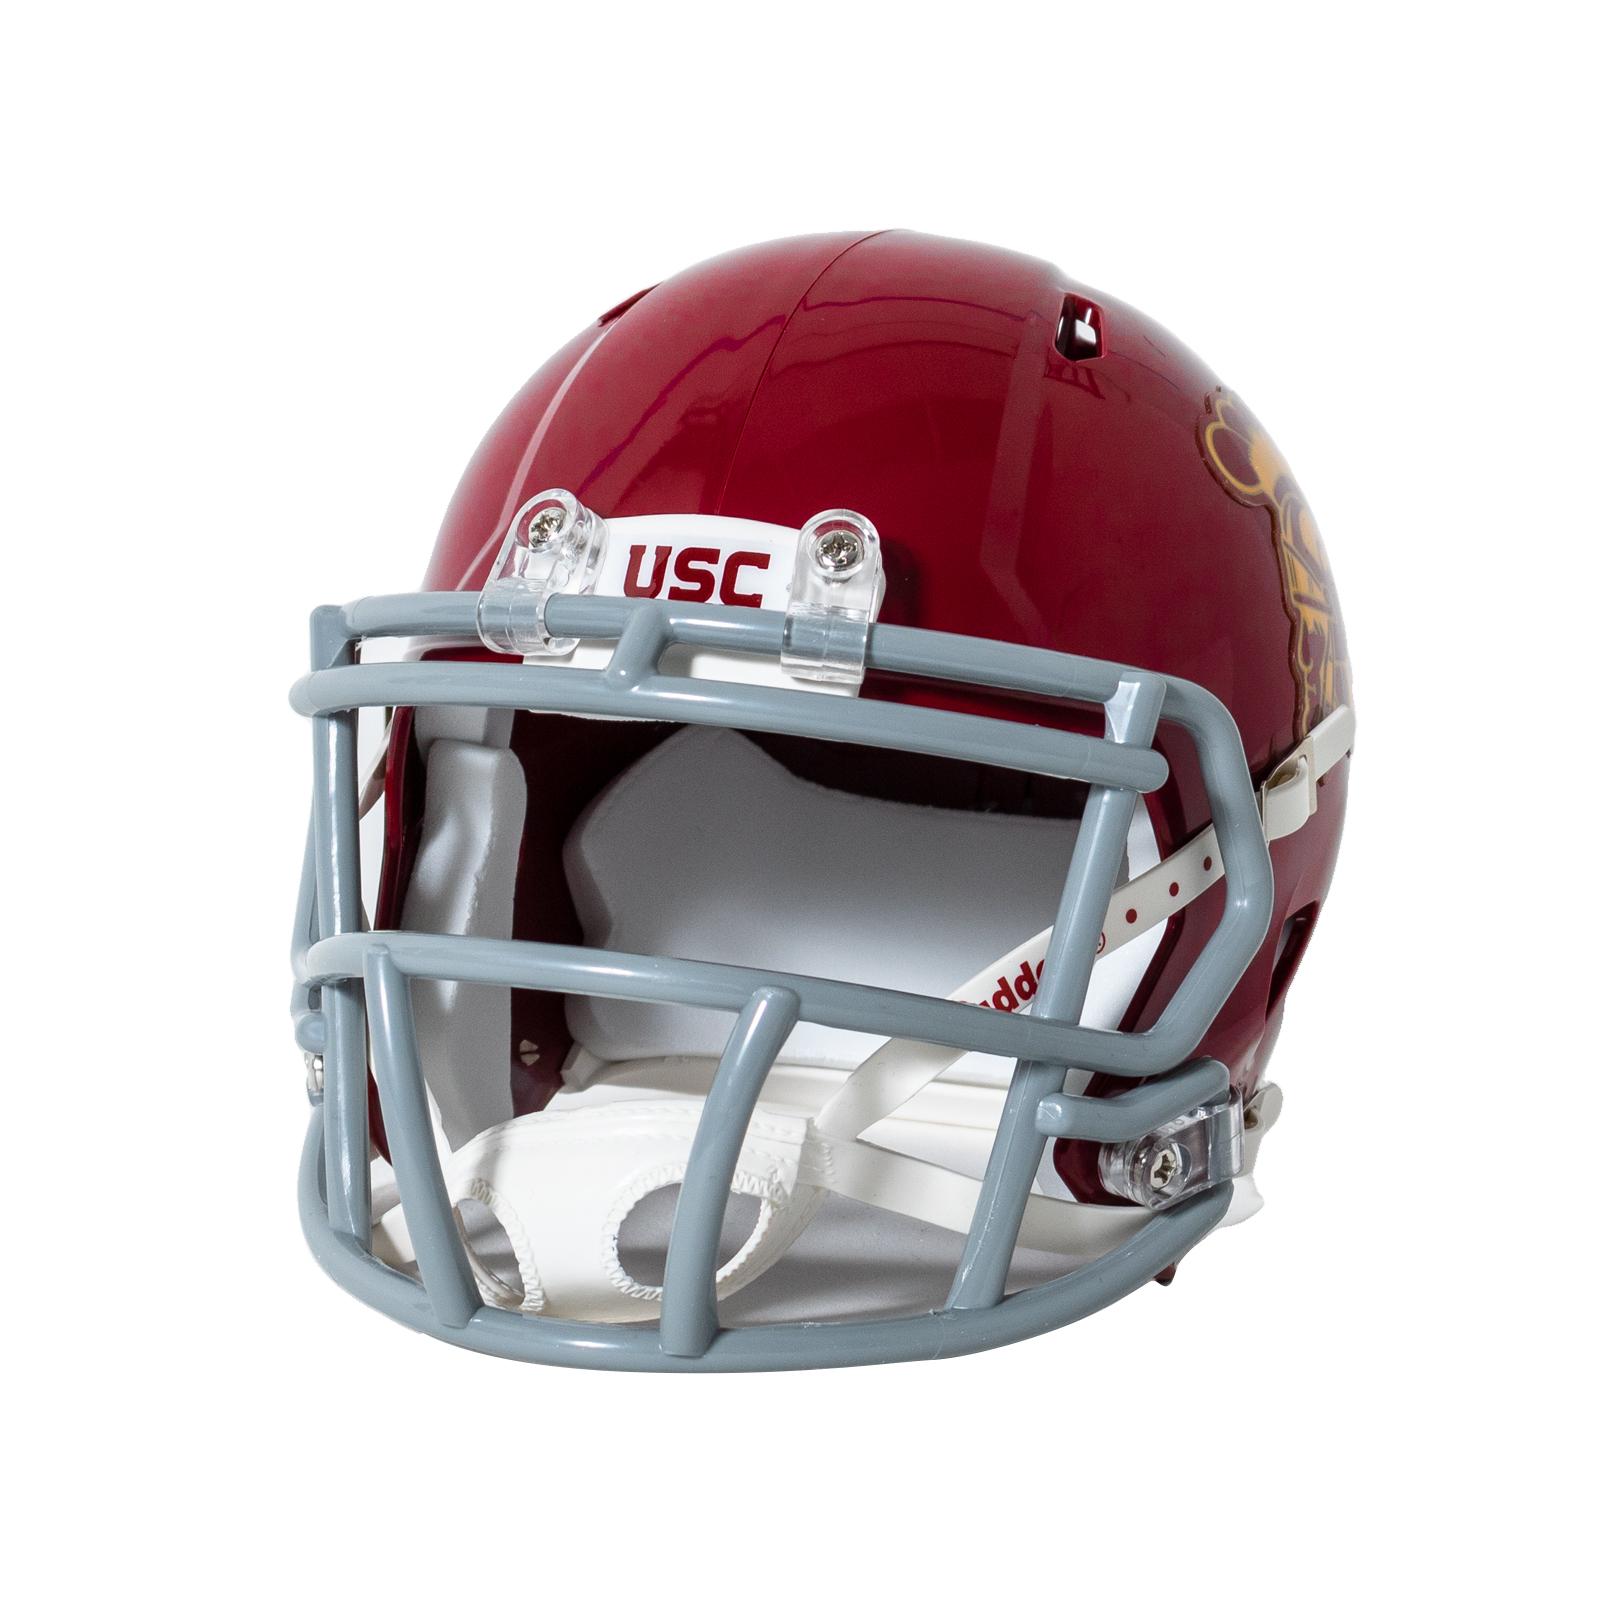 USC Speed Mini Helmet by Riddell image01